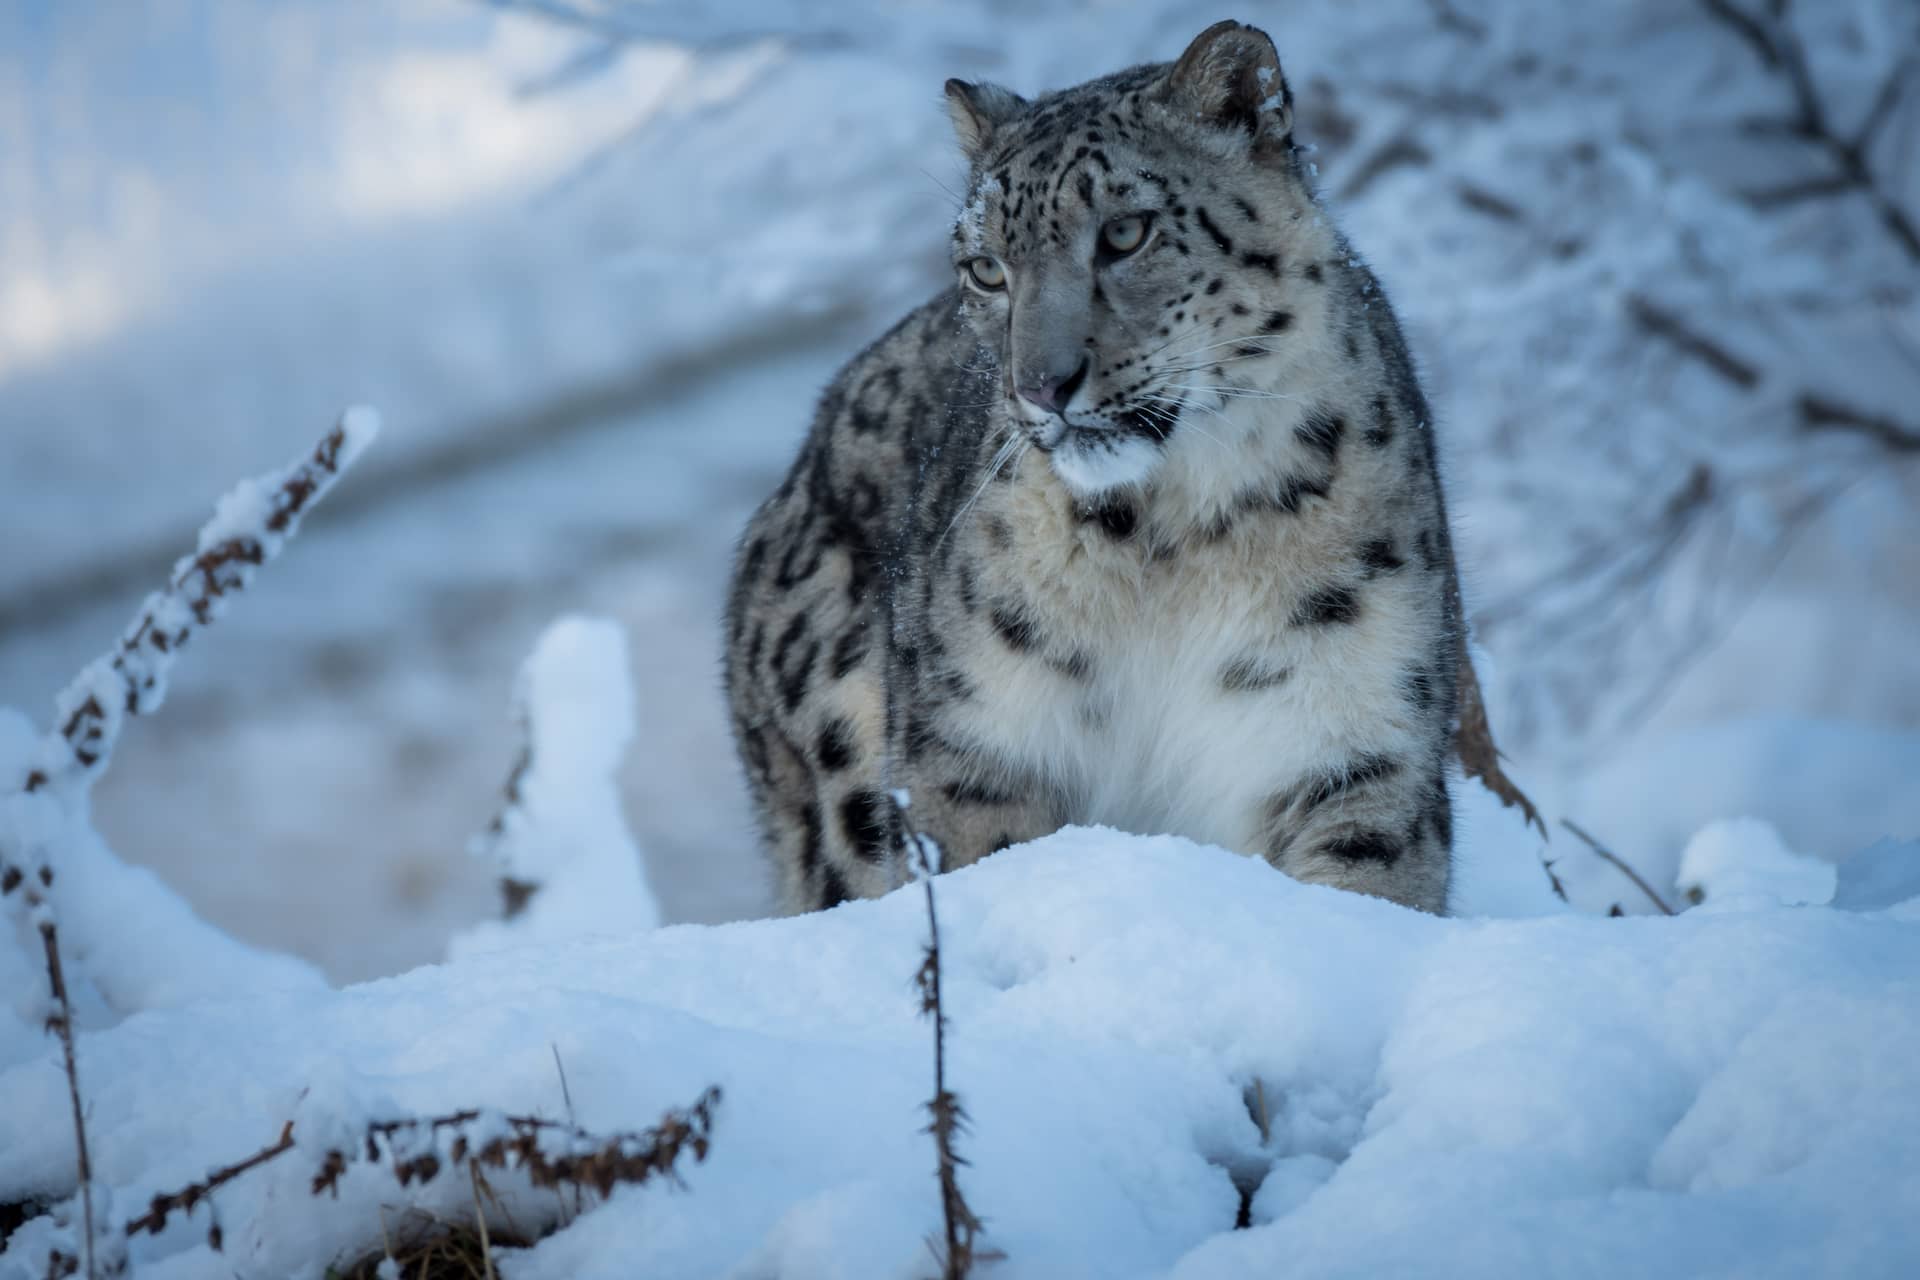 Snow leopard Koshi stood on snowy hillside looking to the left. IMAGE: Alyson Houston 2021